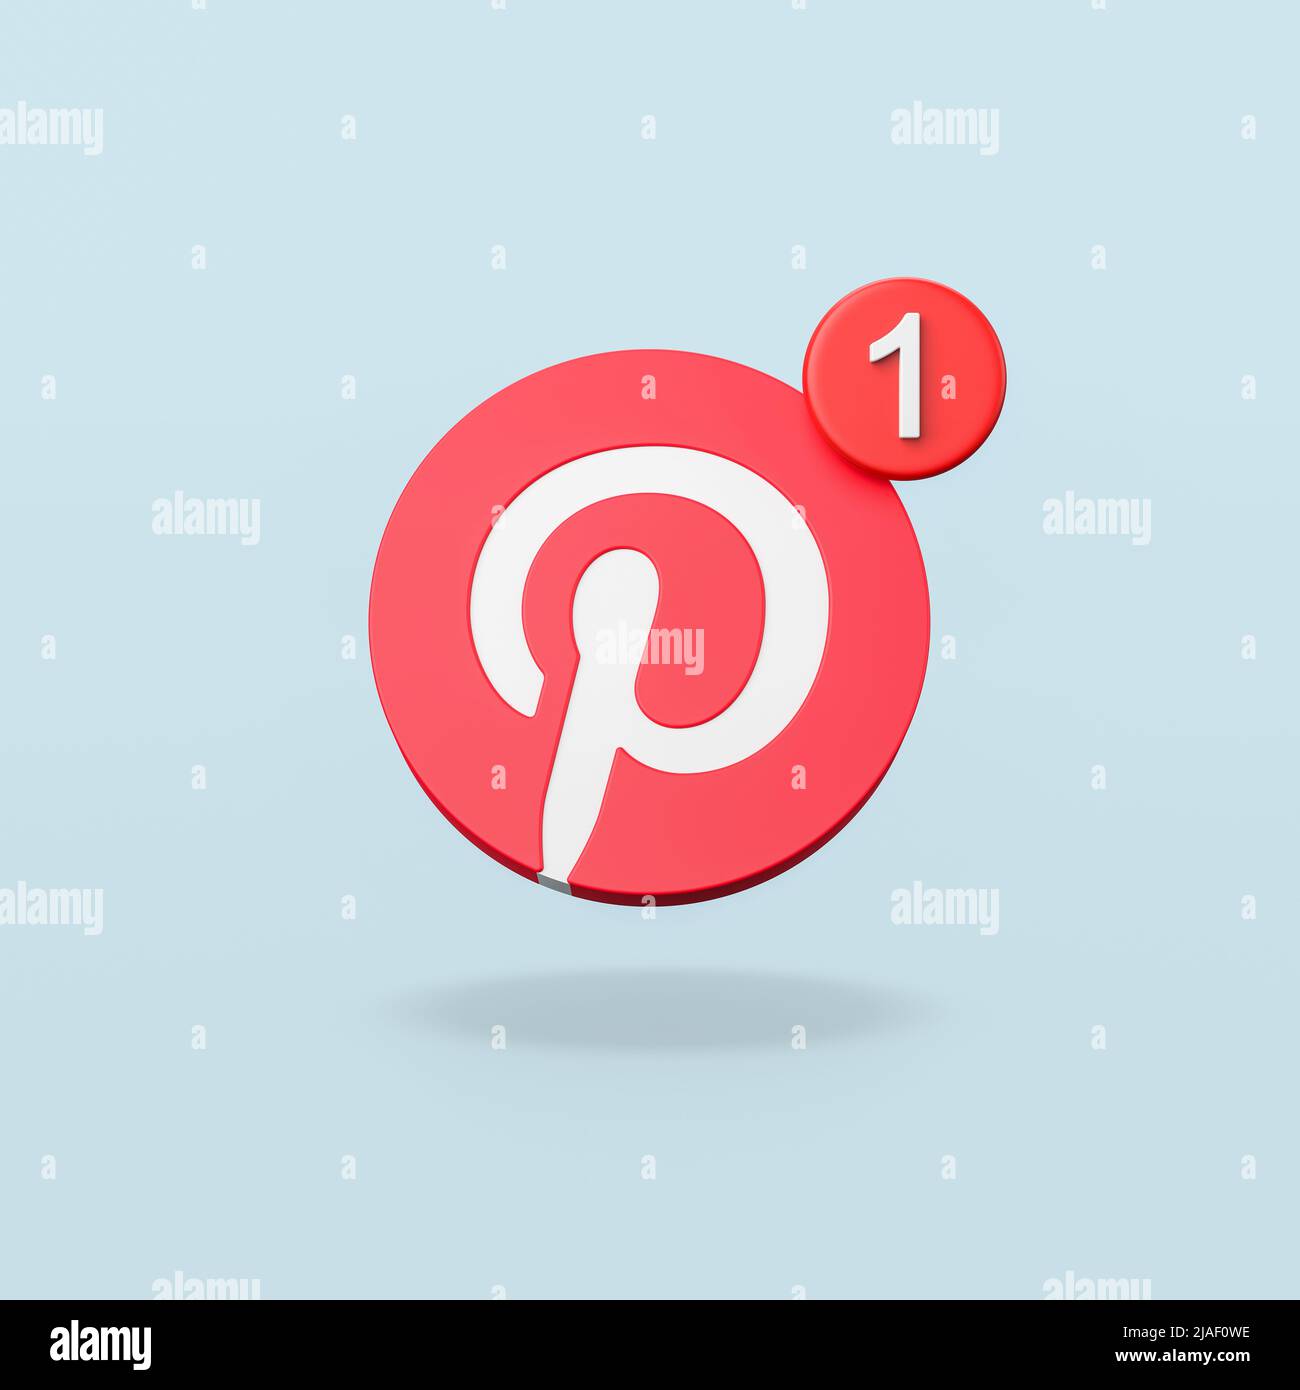 Pinterest Logo with 1 Notification on Blue Background Stock Photo